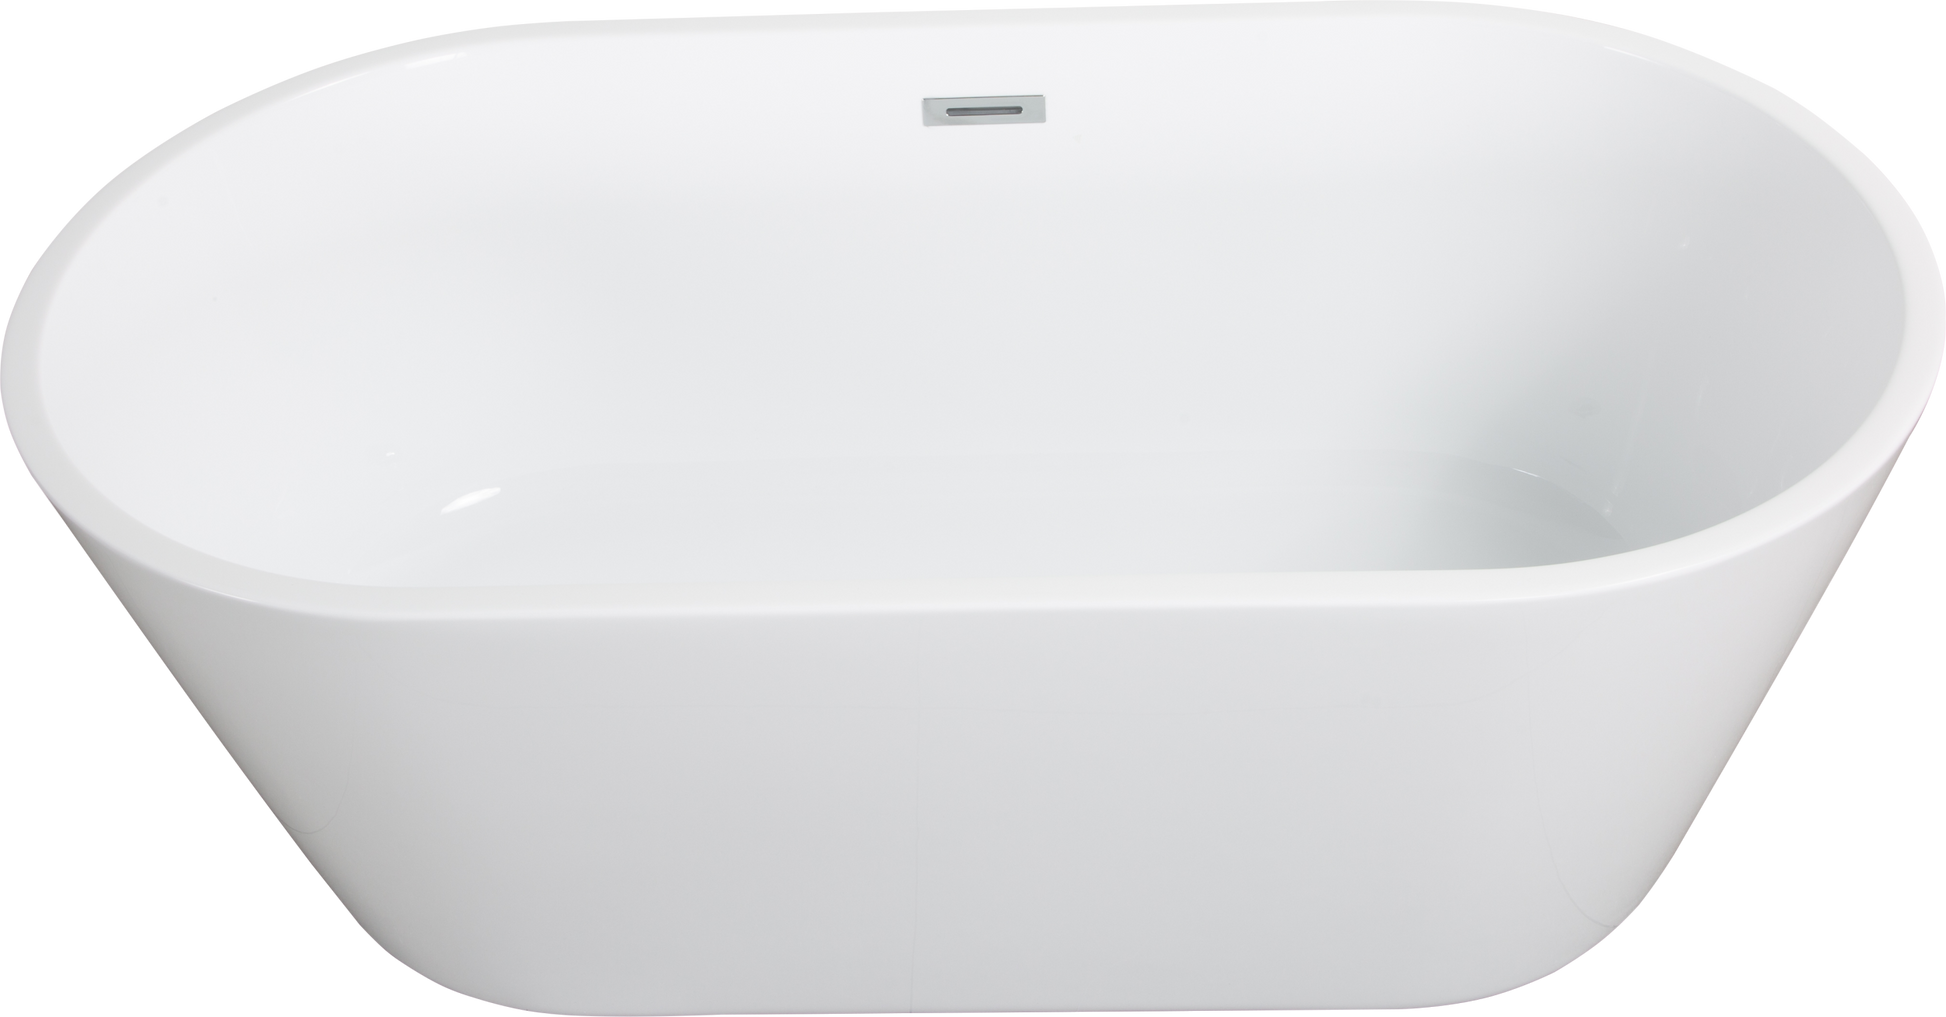 Deluxe High Gloss Acrylic Freestanding Soaking Bathtub glossy white-fiberglass-acrylic